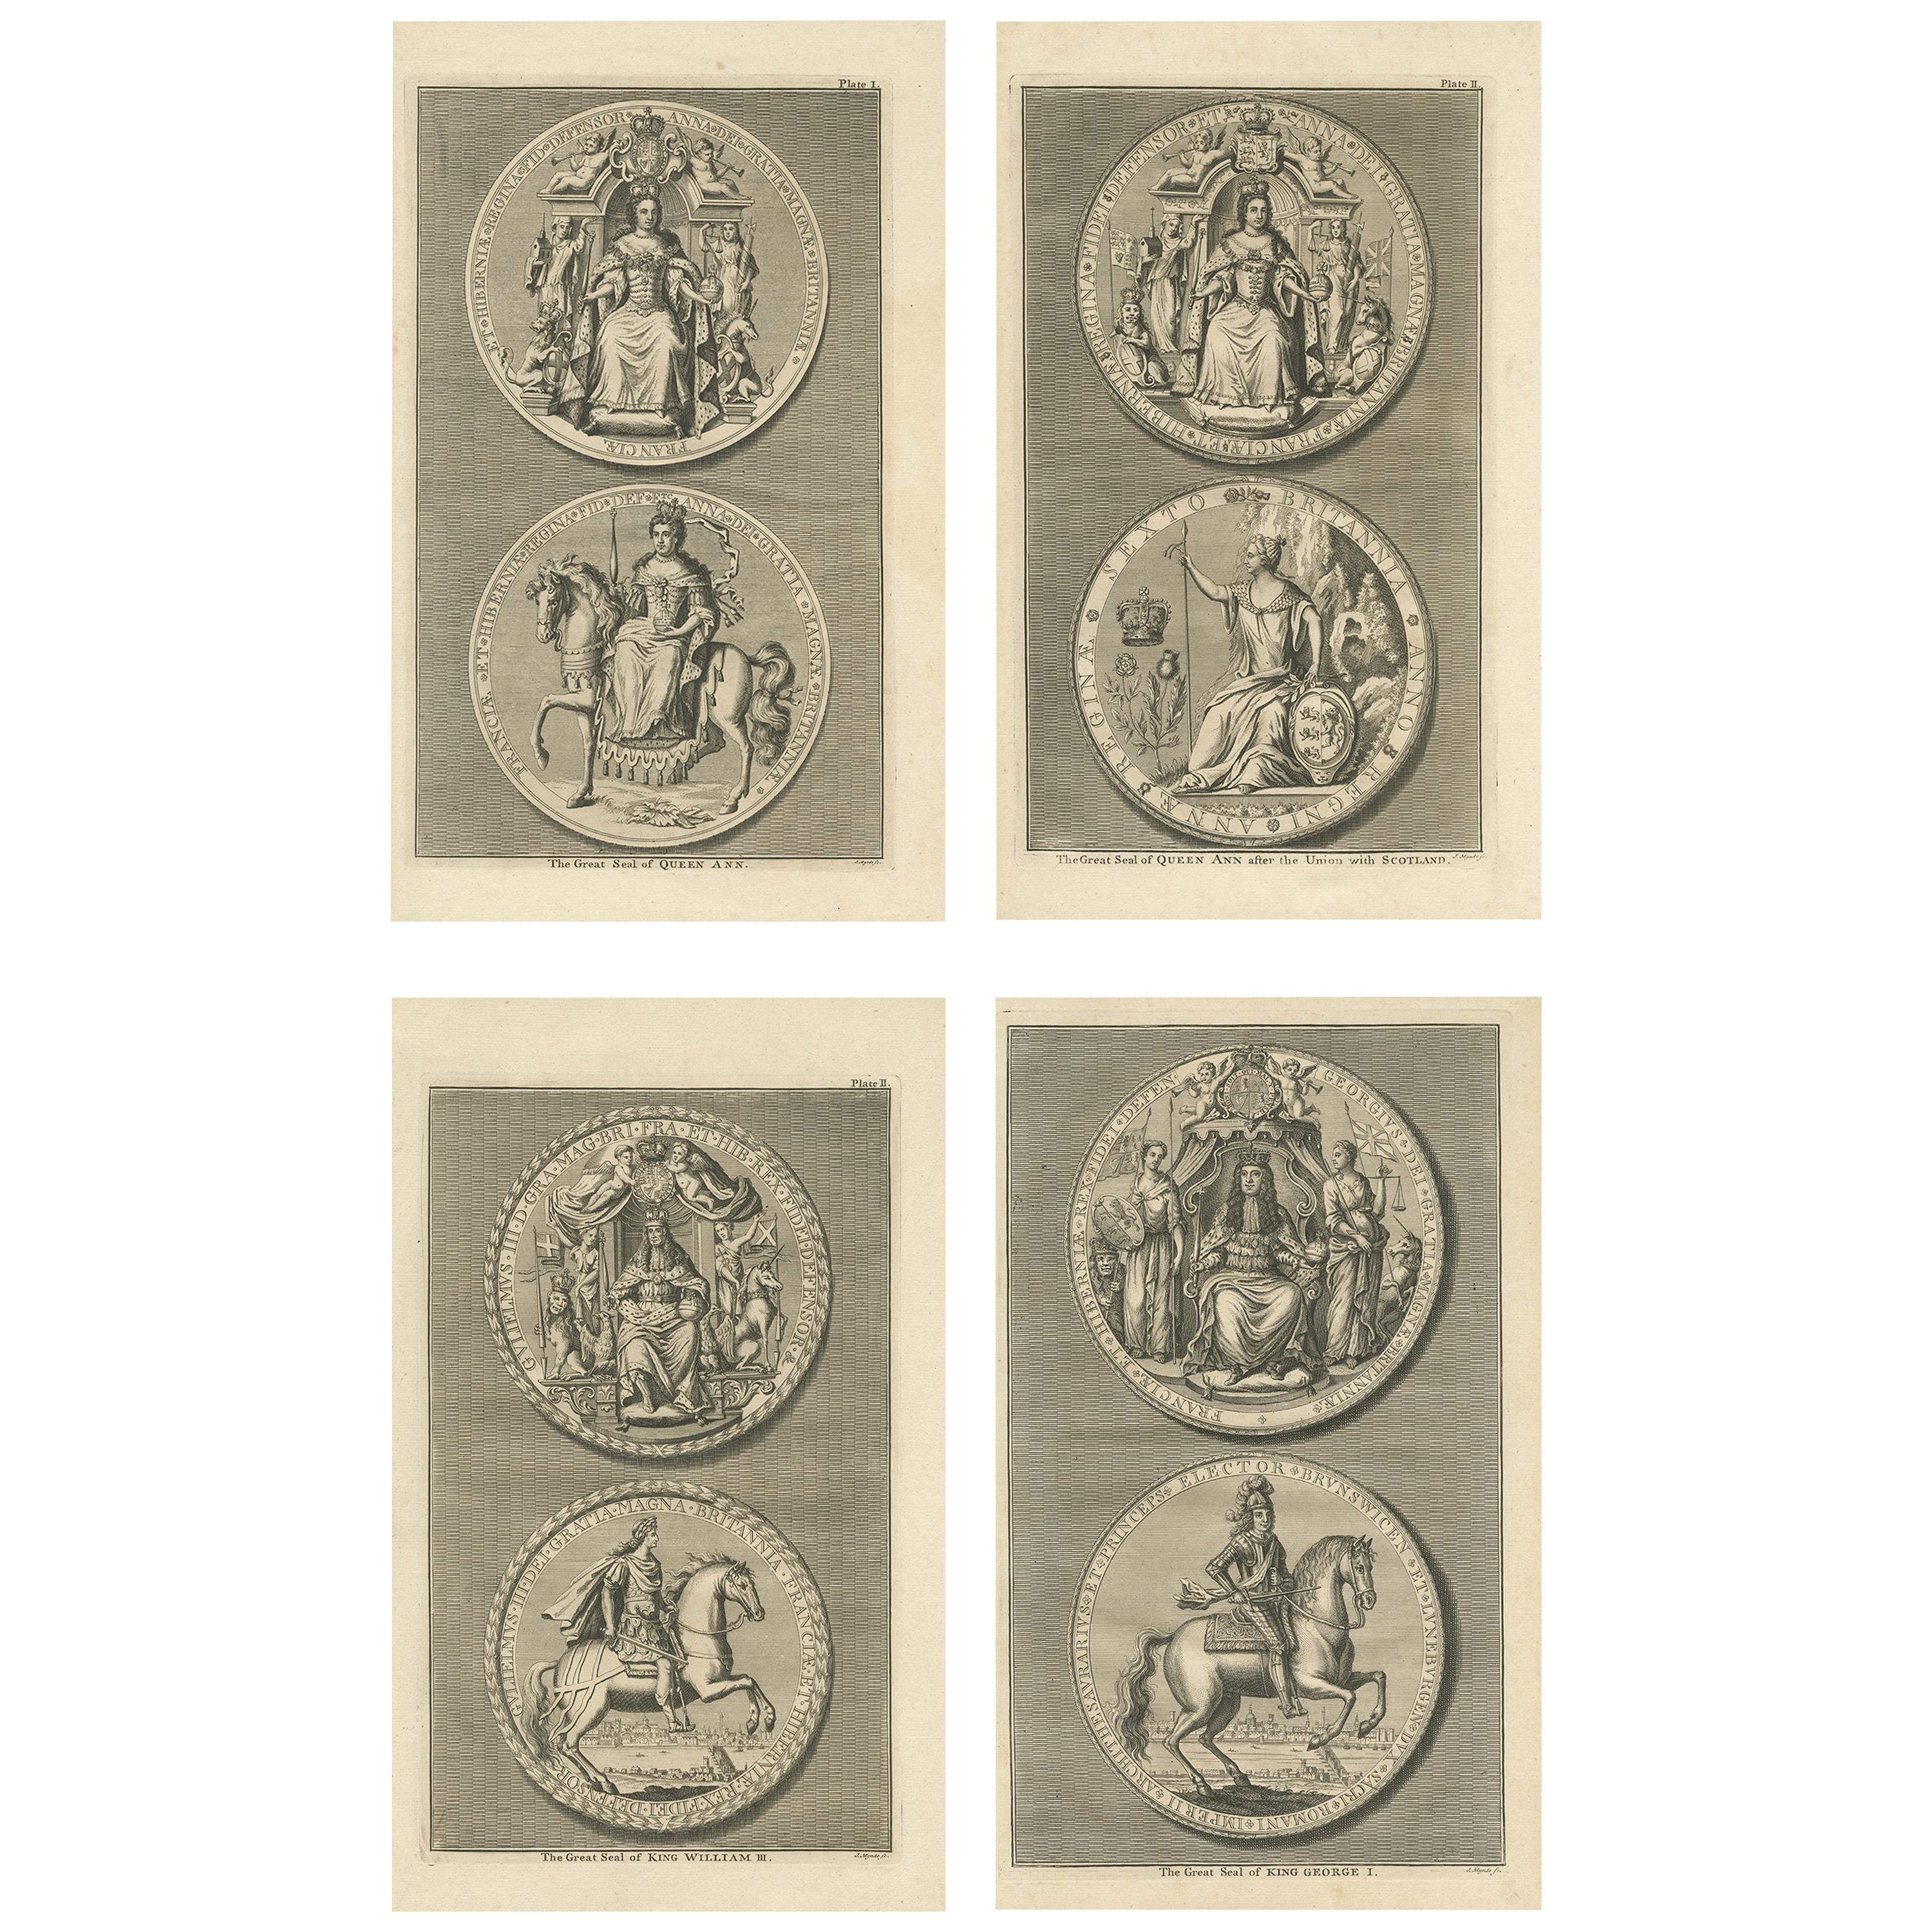 Set of 4 Antique Print of Great Seals by Rapin de Thoyras, circa 1780